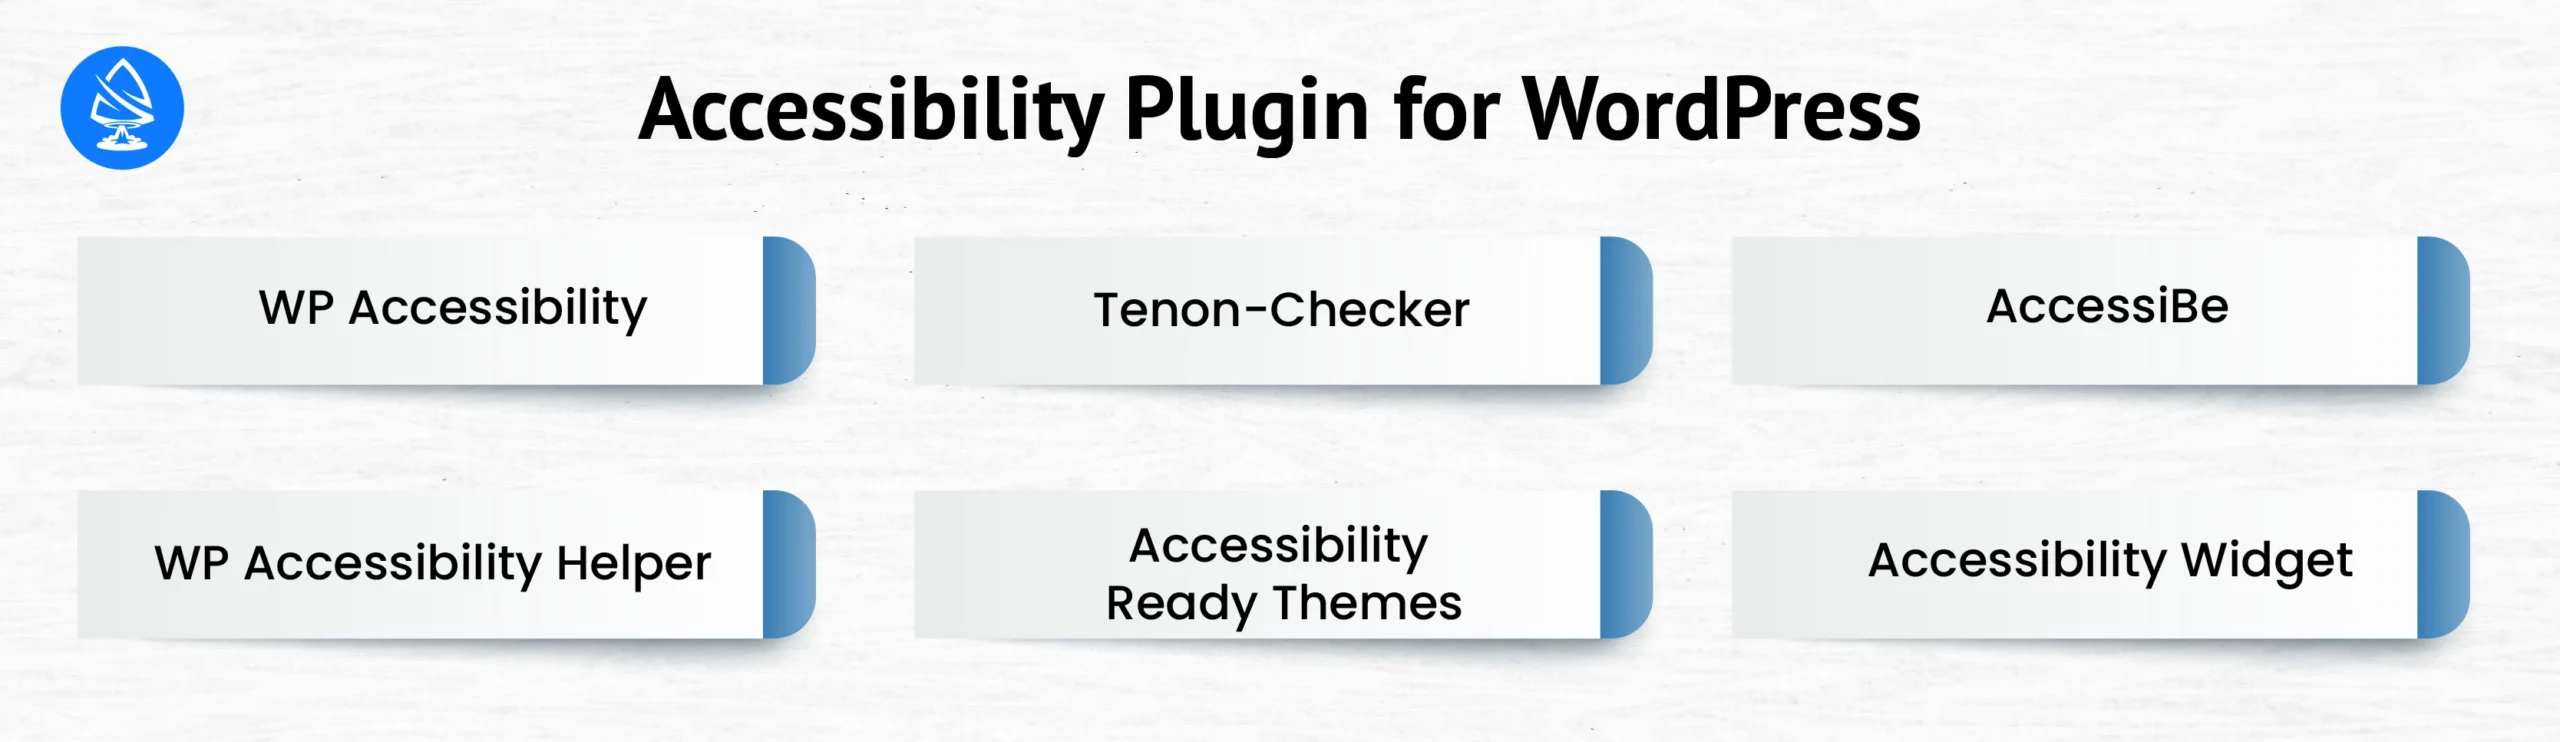 Accessibility Plugin for WordPress